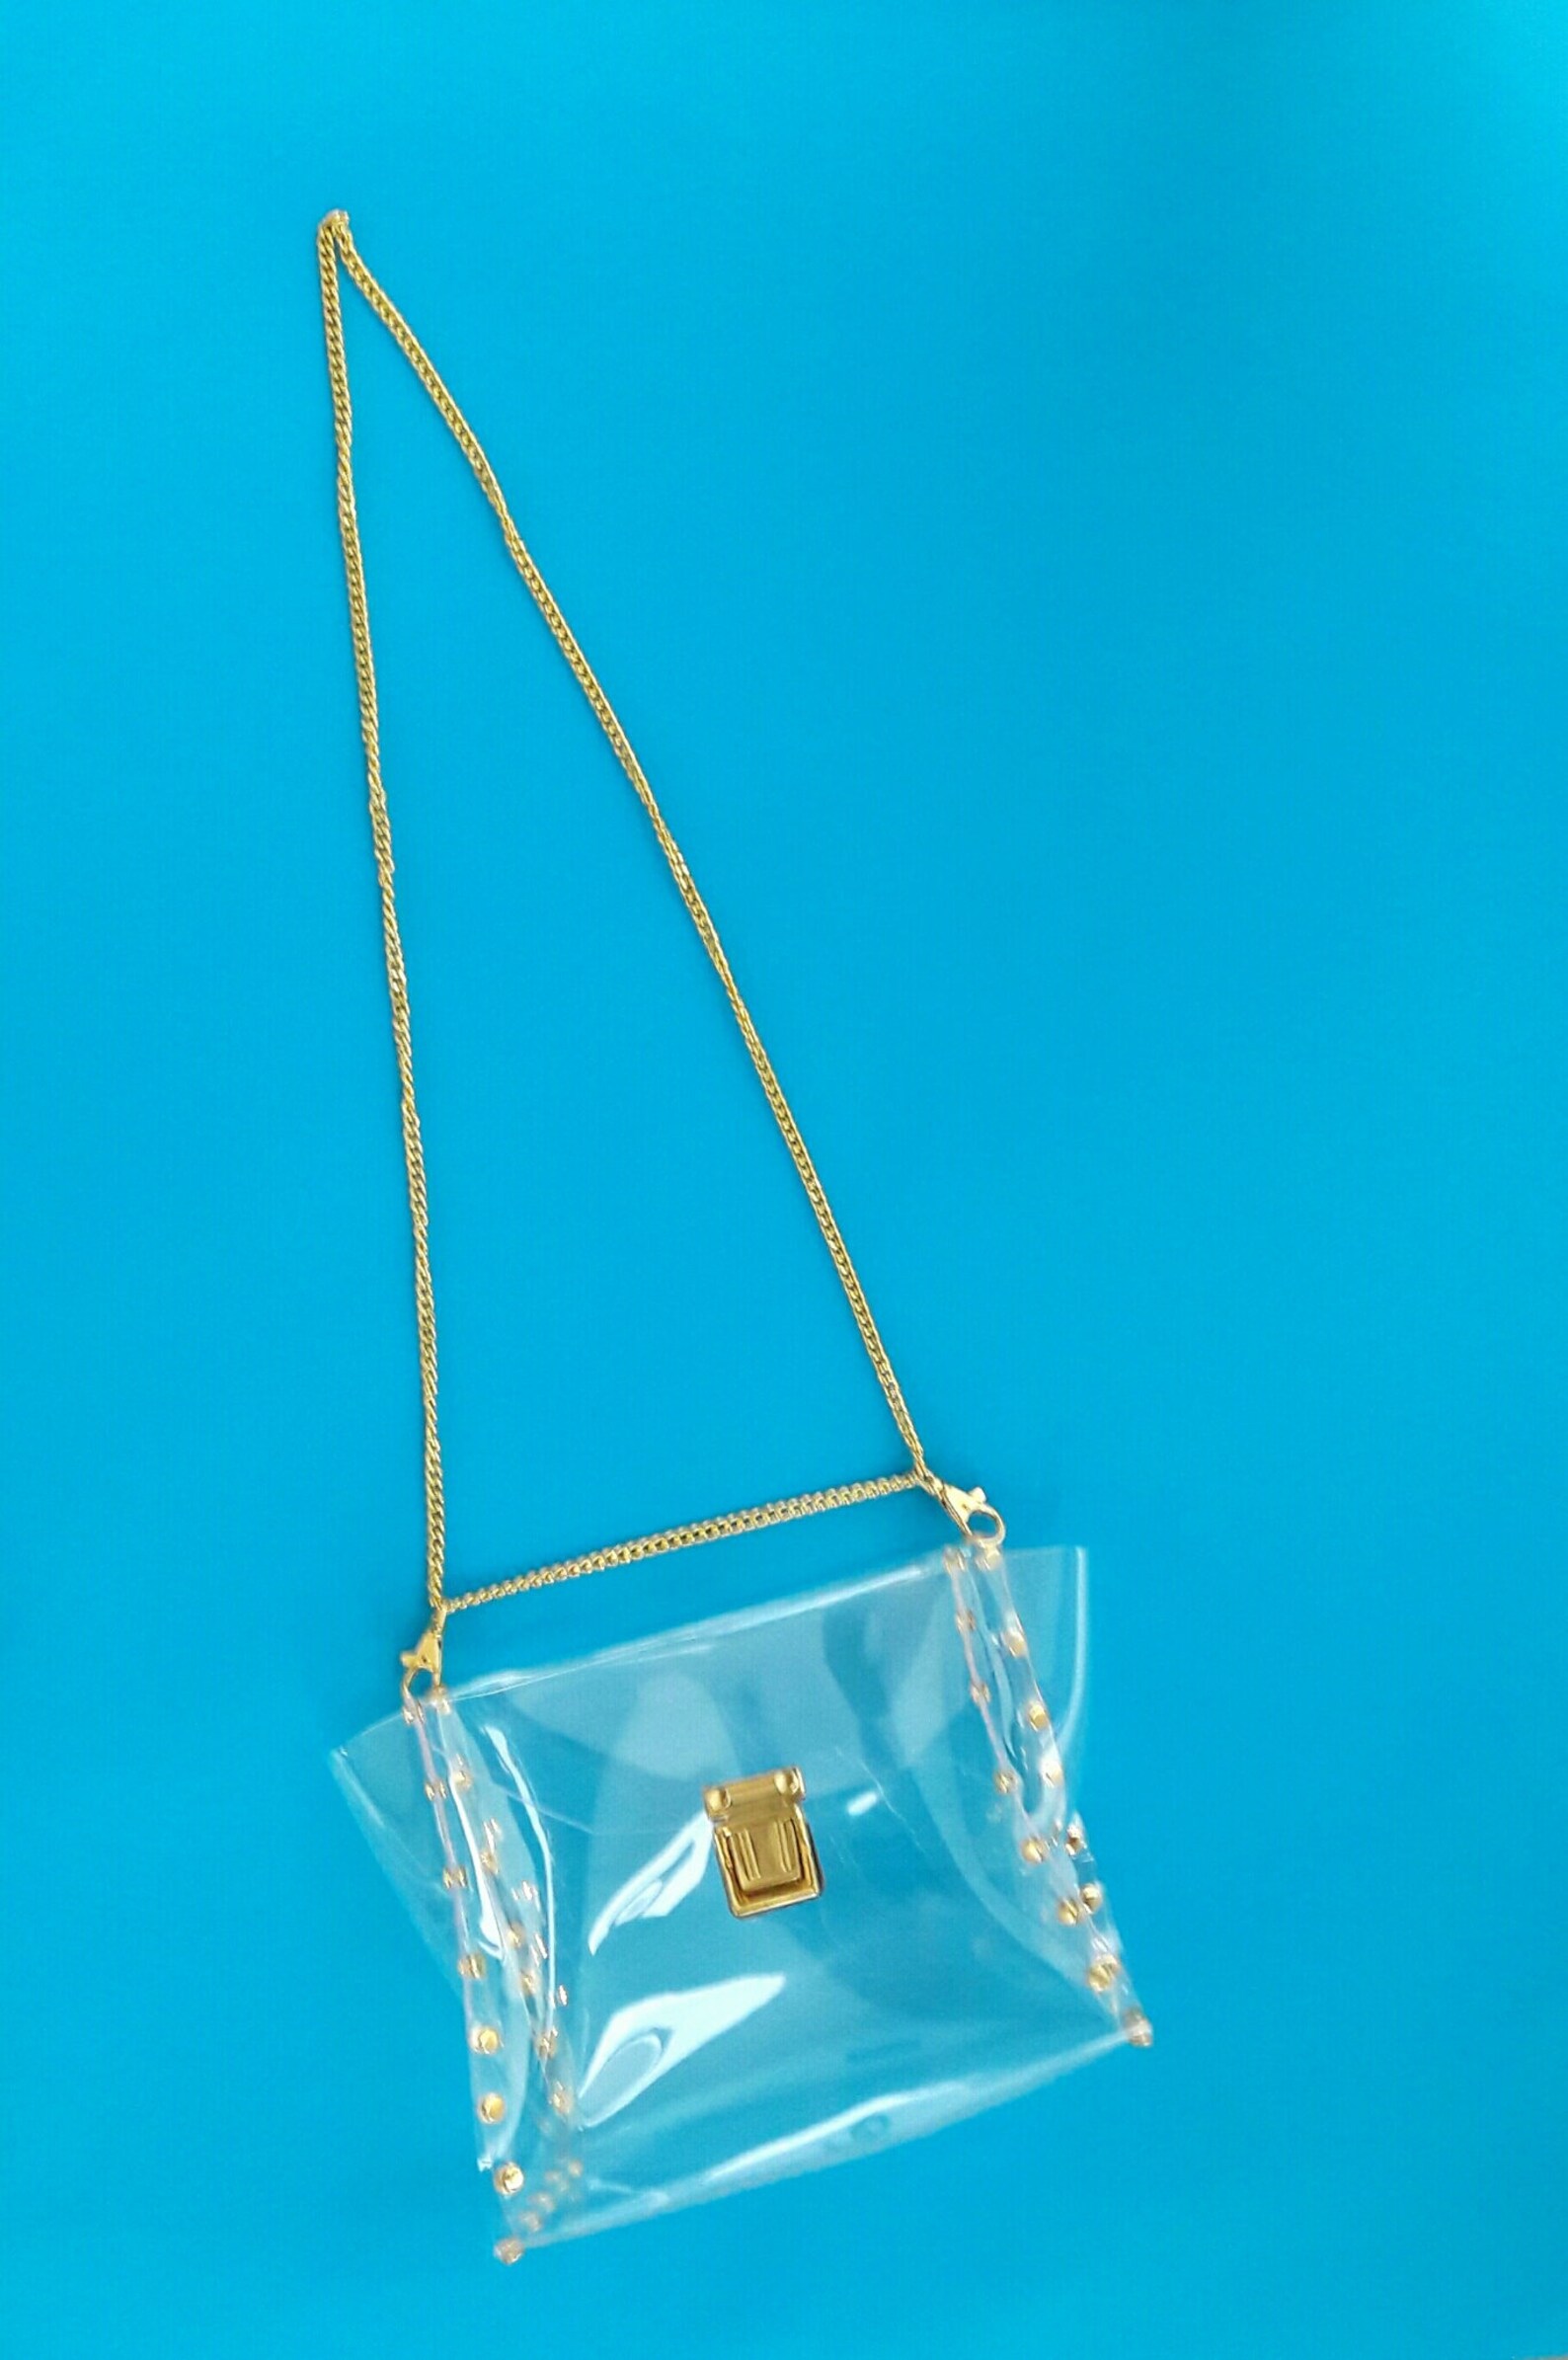 Clear Deluxe Bag Transparent Glam Handbag Vinyl Clear Bag | Etsy